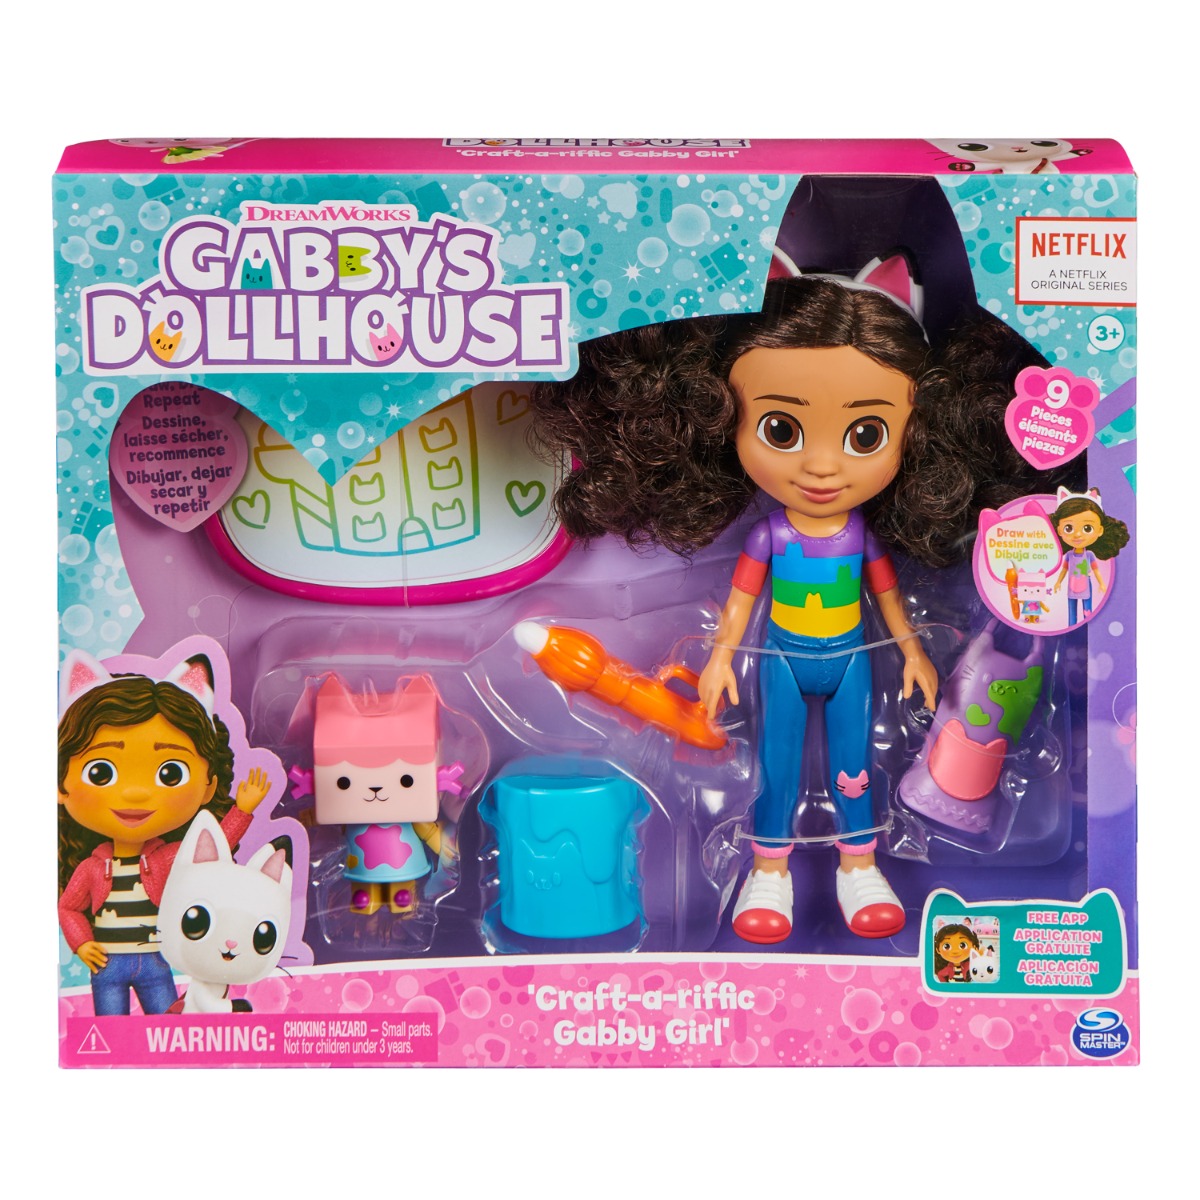 Set de joaca, papusa cu figurina si accesorii, Gabbys Dollhouse, Craft a riffic